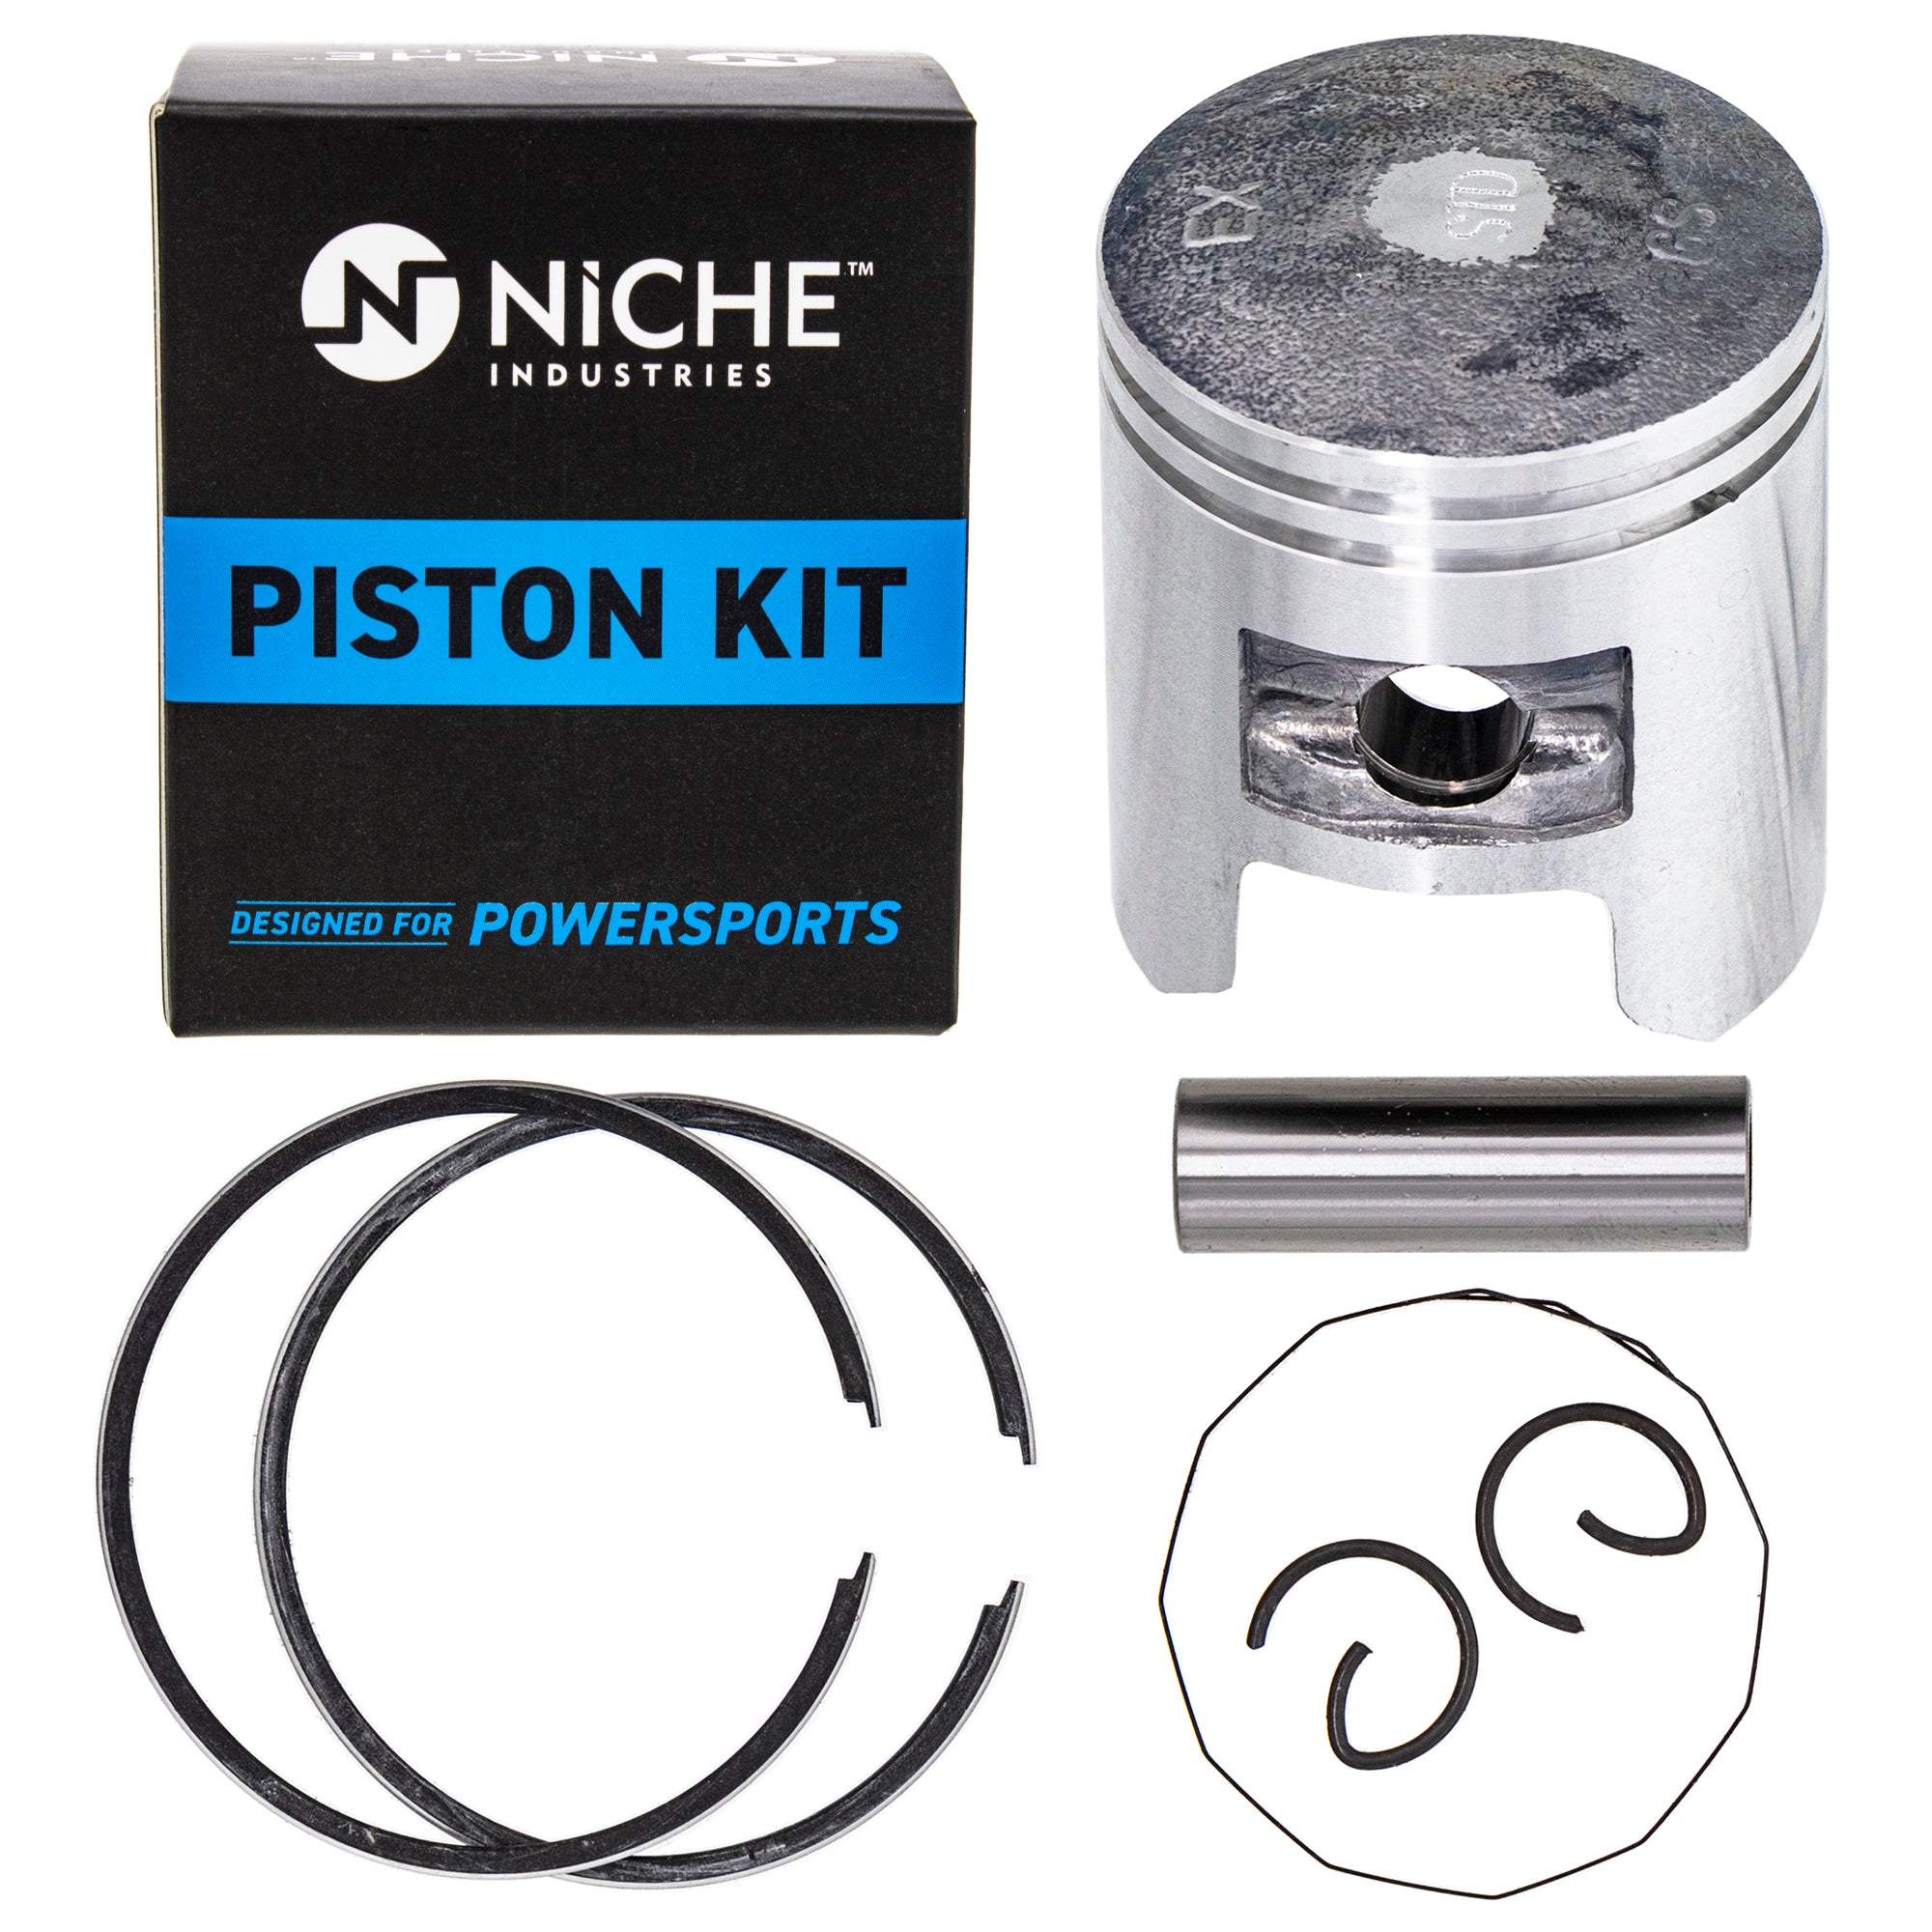 NICHE MK1001143 Piston Kits & Piston Rings